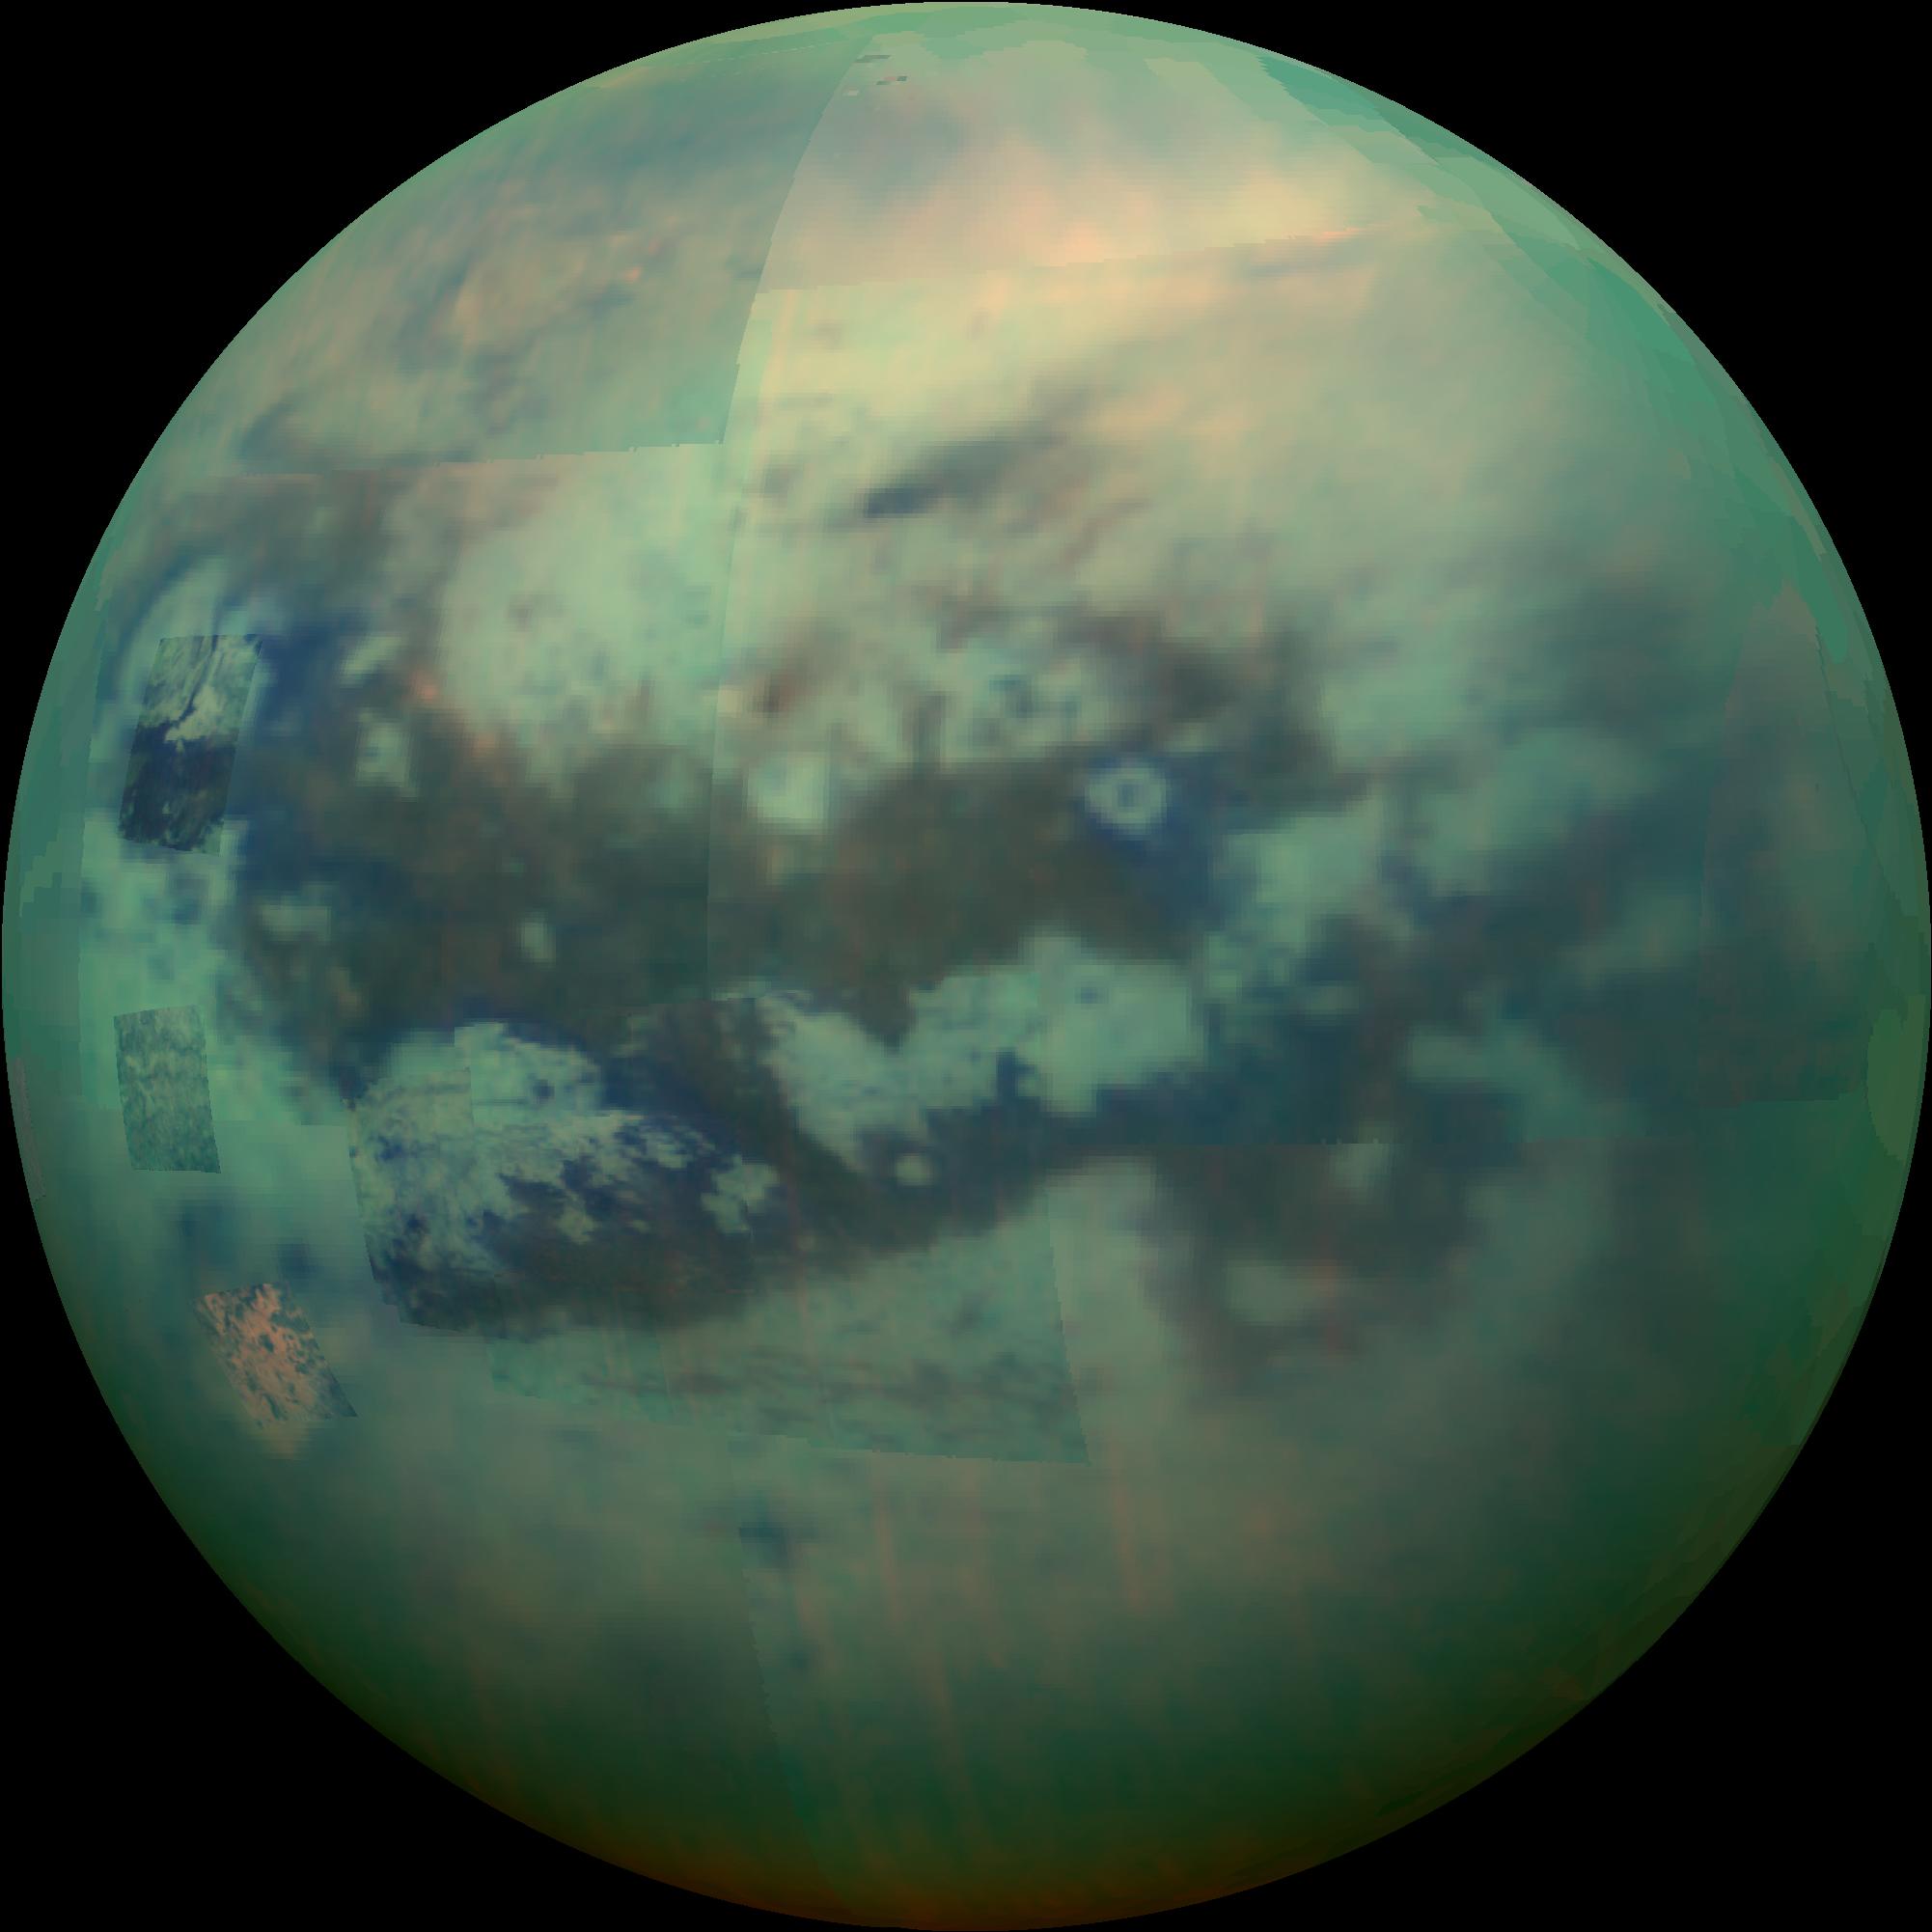 Titan as seen by Cassini's VIMS